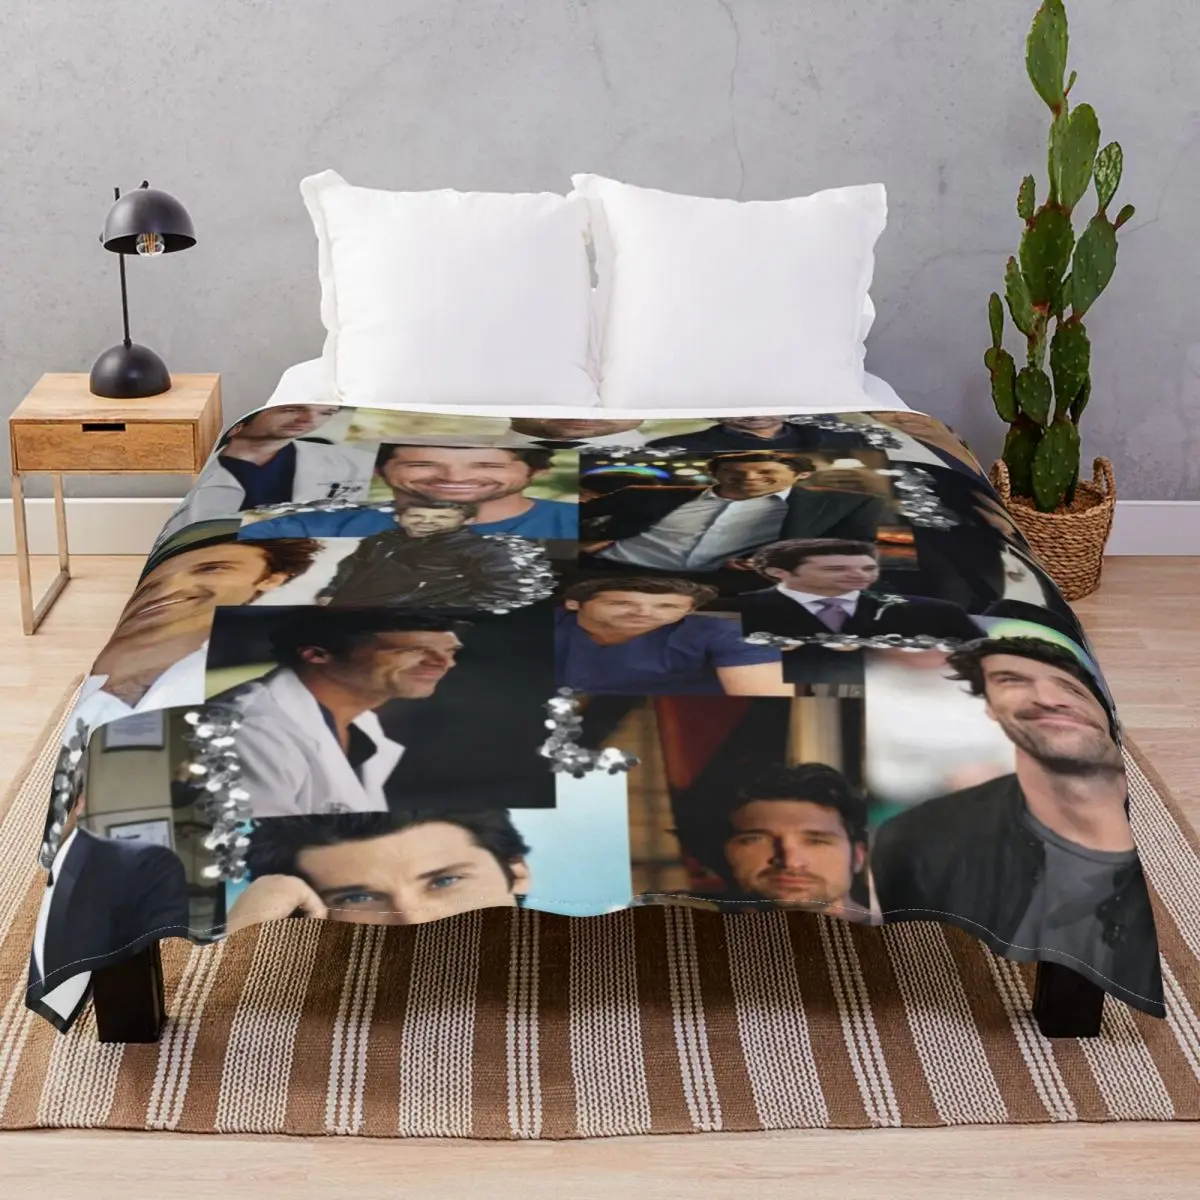 Derek Shepherd Collage Blankets Flannel Textile Decor Fluffy Unisex Throw Blanket for Bedding Home Couch Camp Office